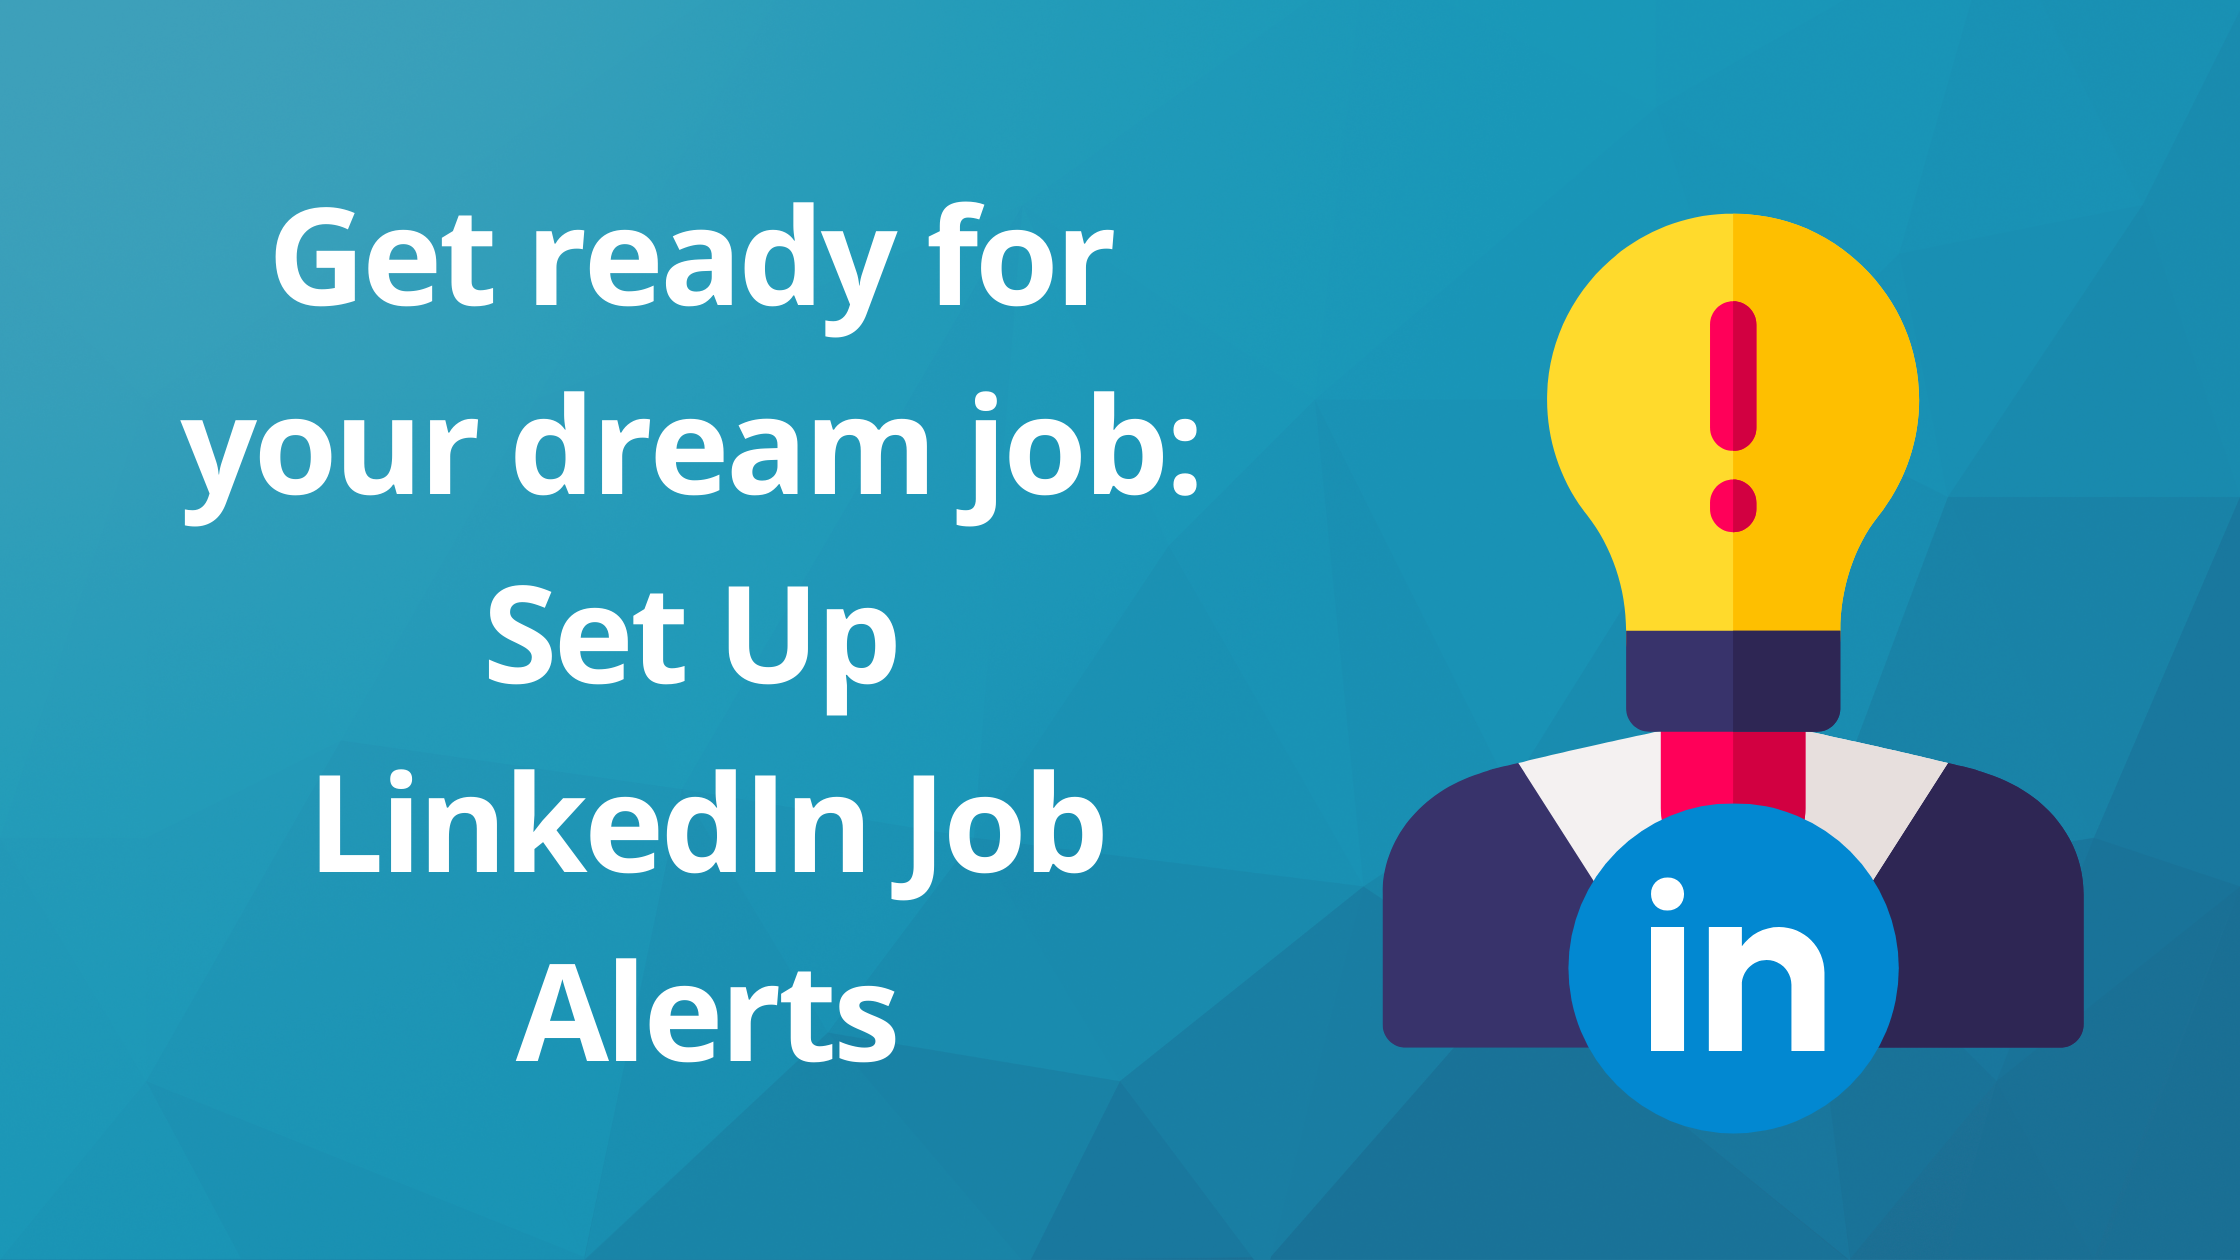 Get ready for your dream job: Set Up LinkedIn Job Alerts